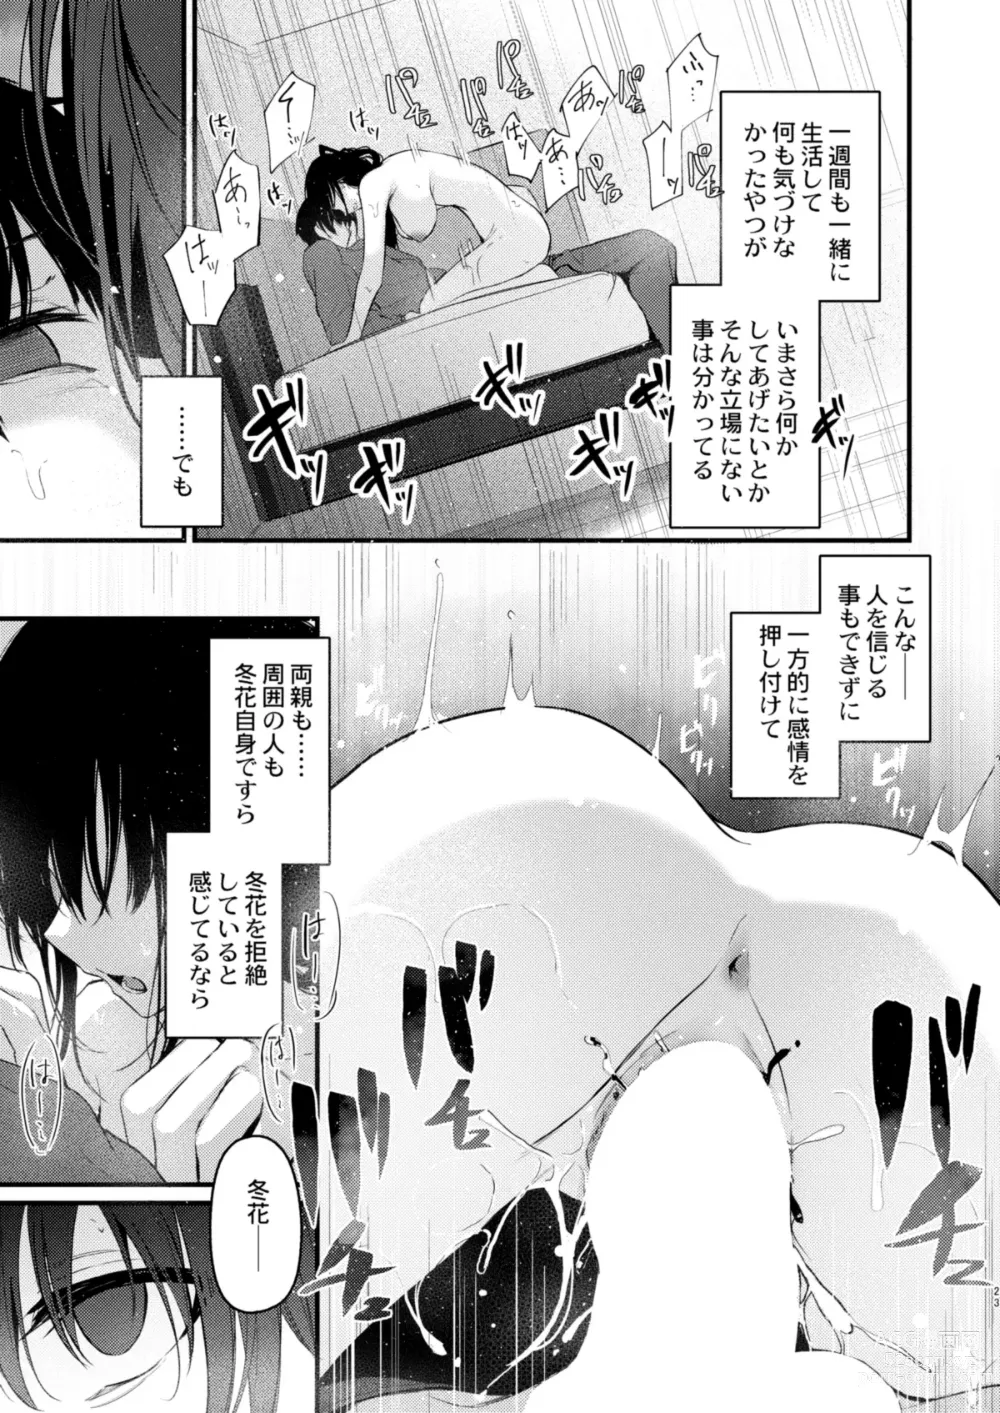 Page 23 of doujinshi PULCHRE BENE RECTE!